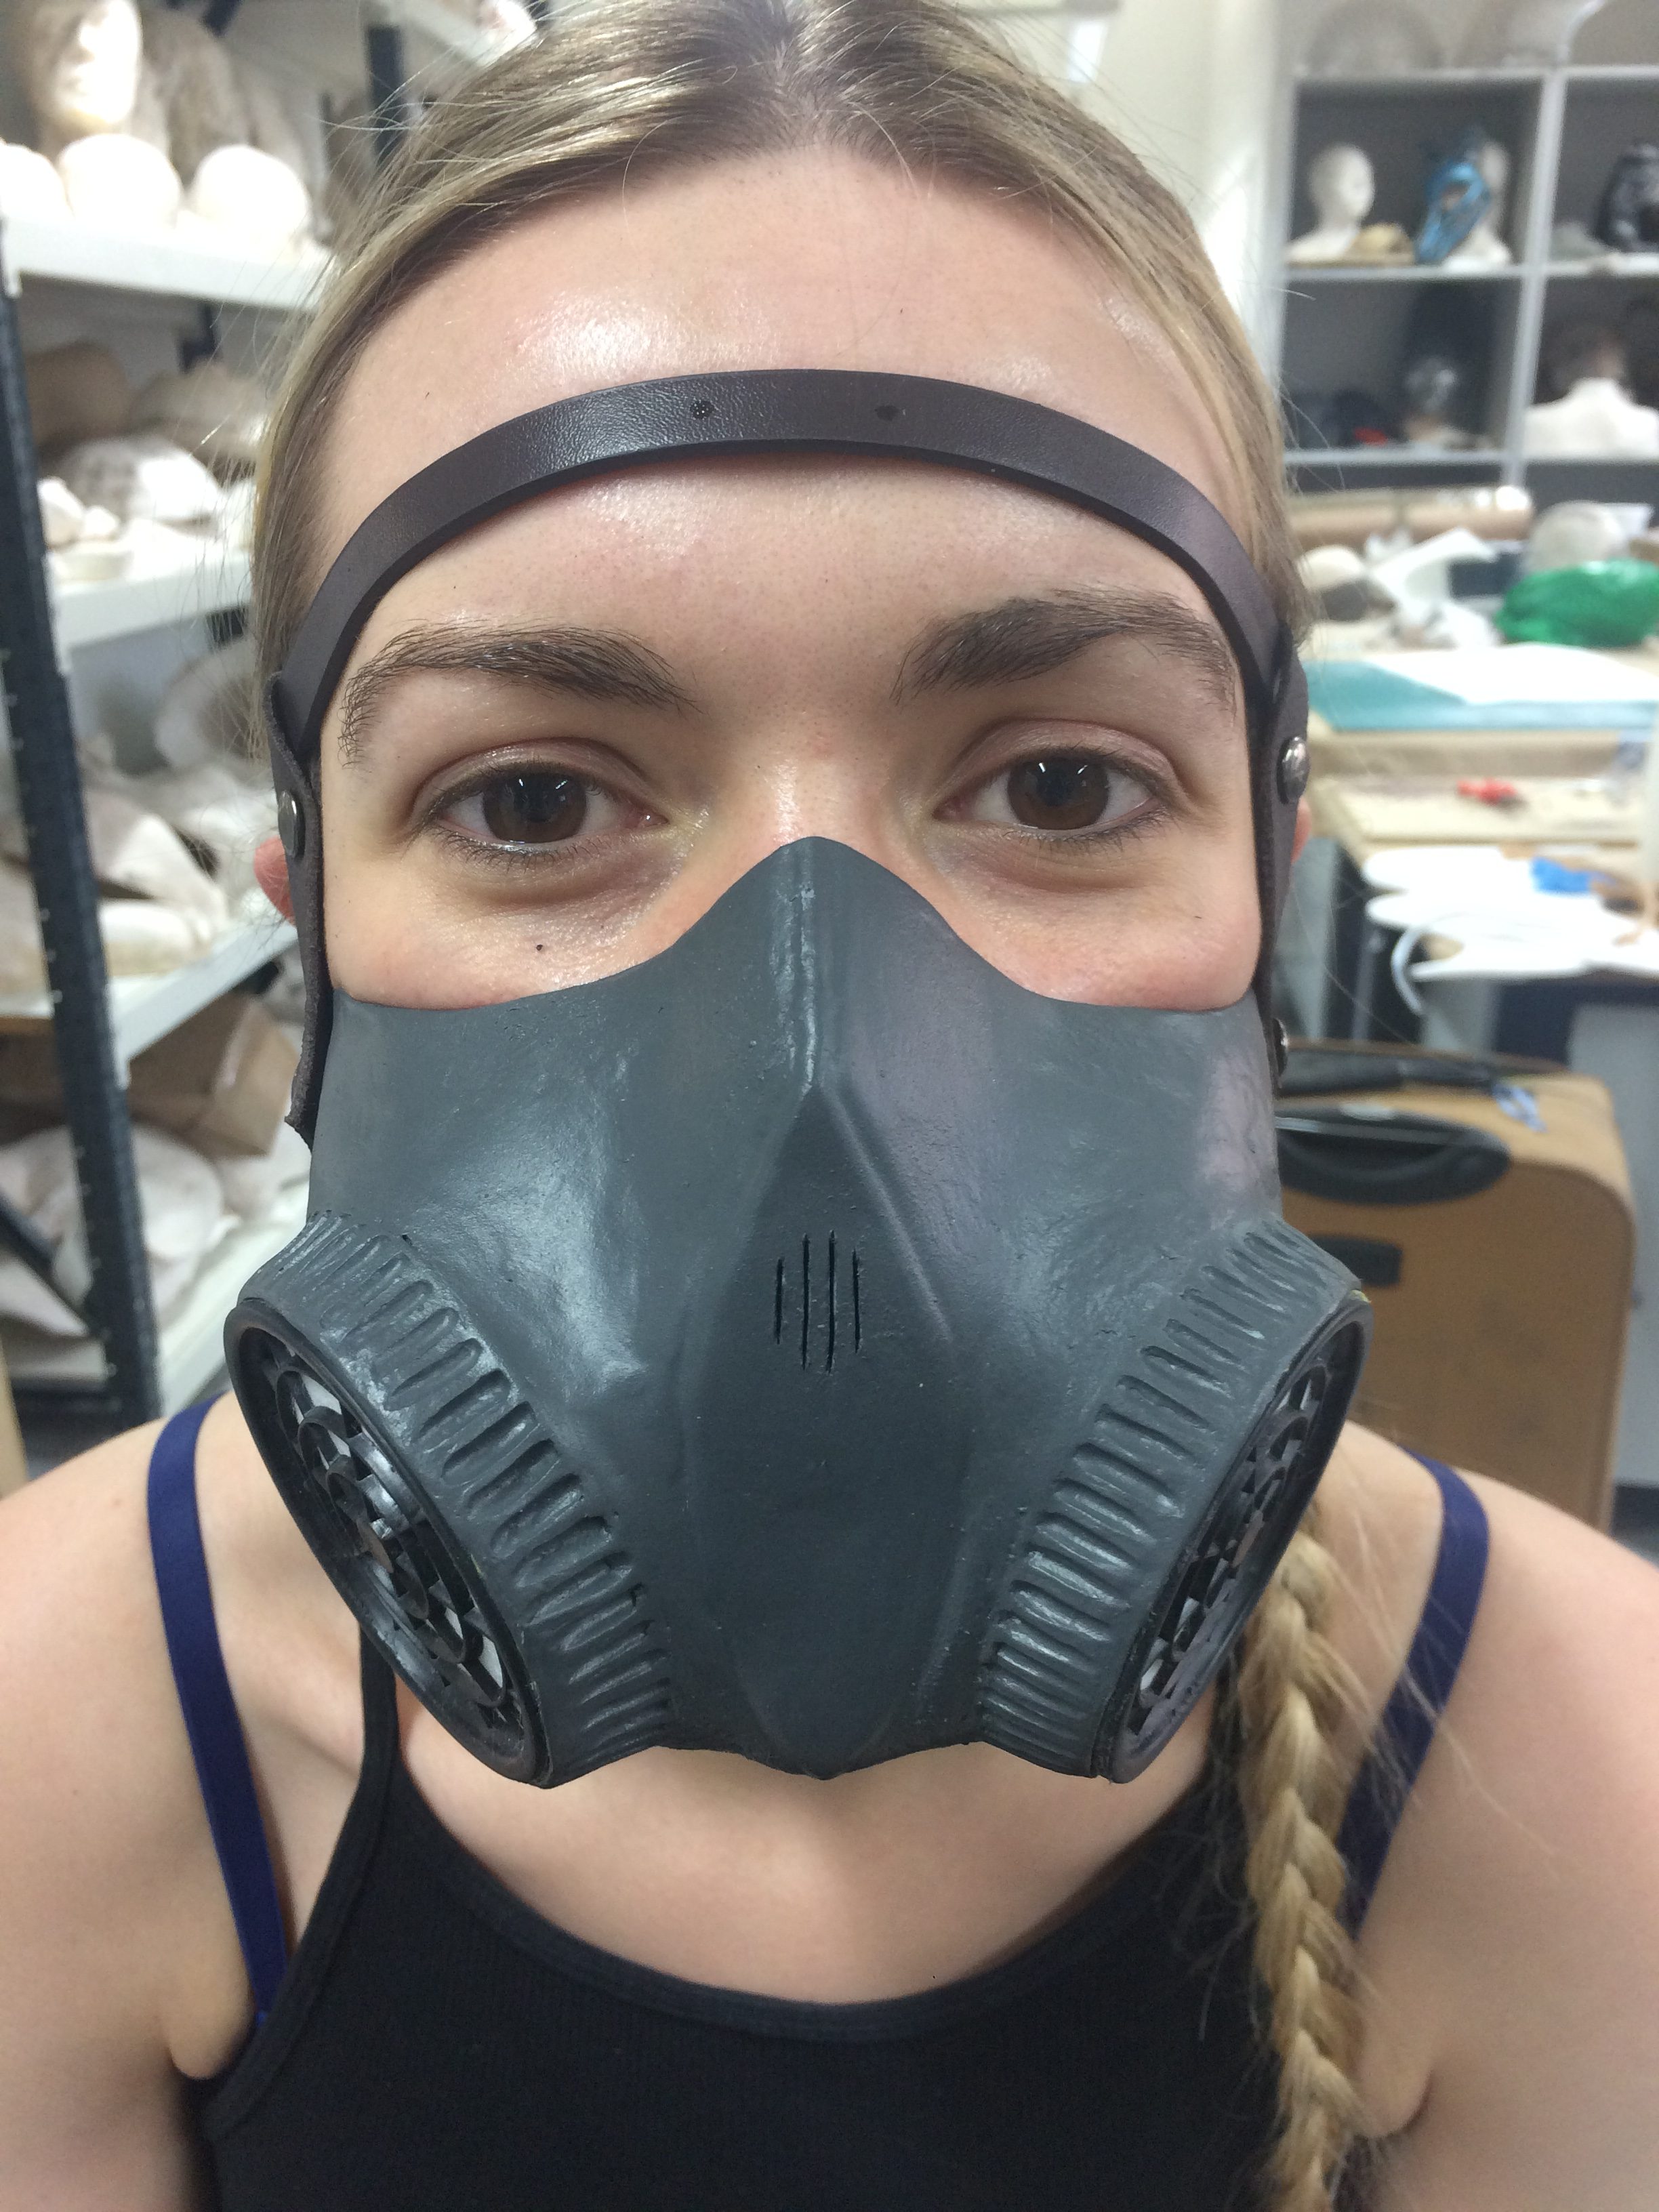 Respirator mask fitting